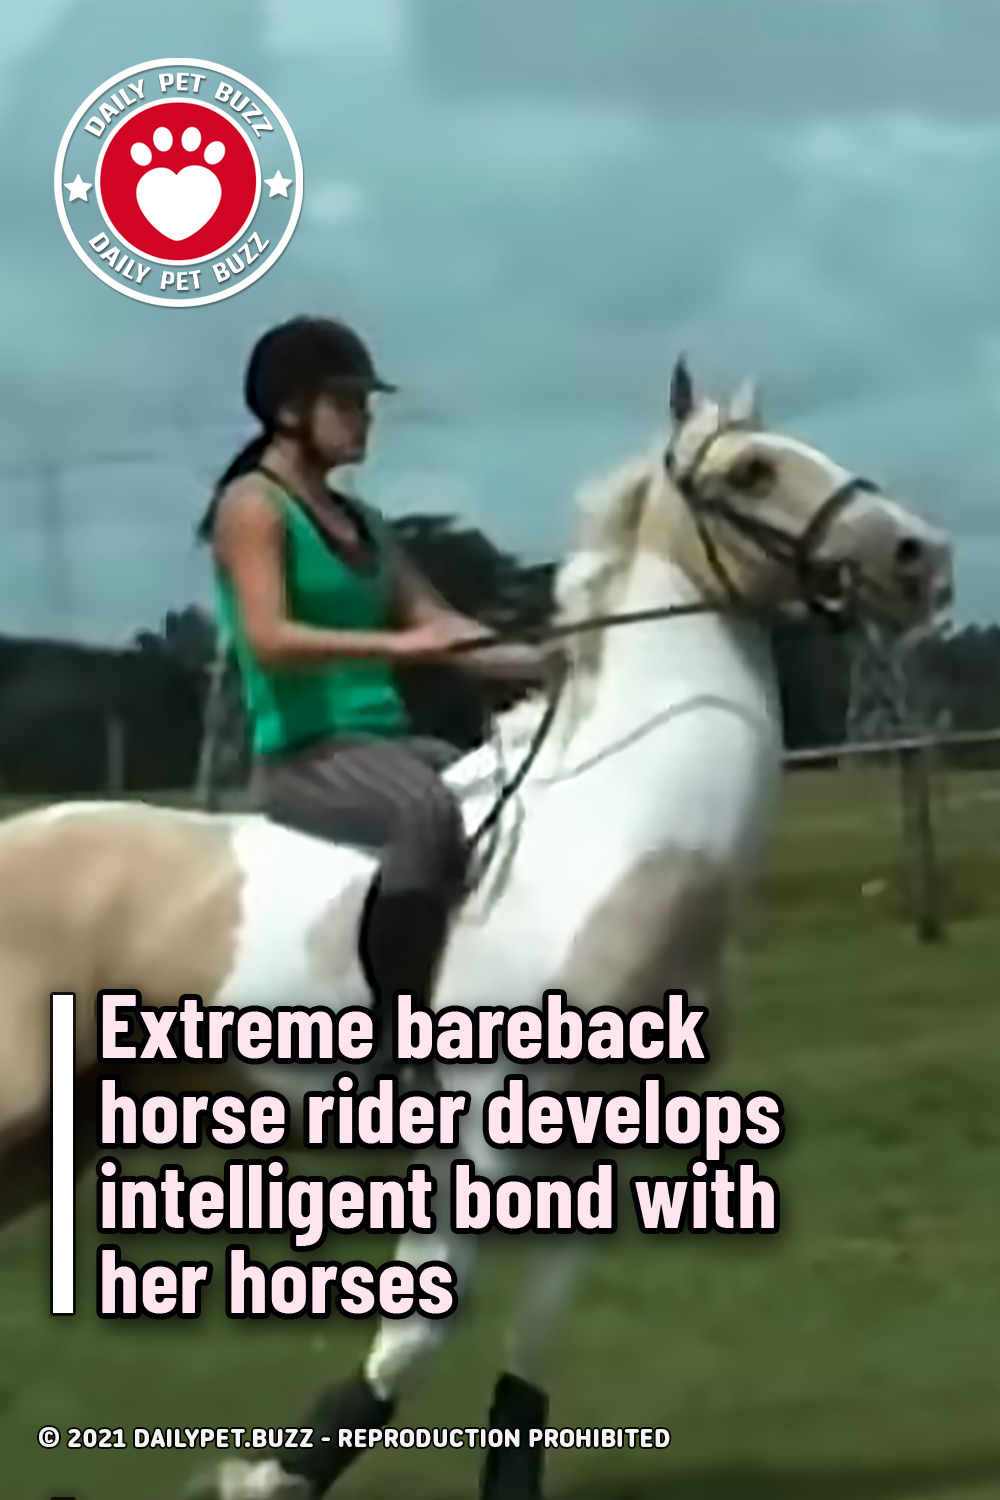 Extreme bareback horse rider develops intelligent bond with her horses